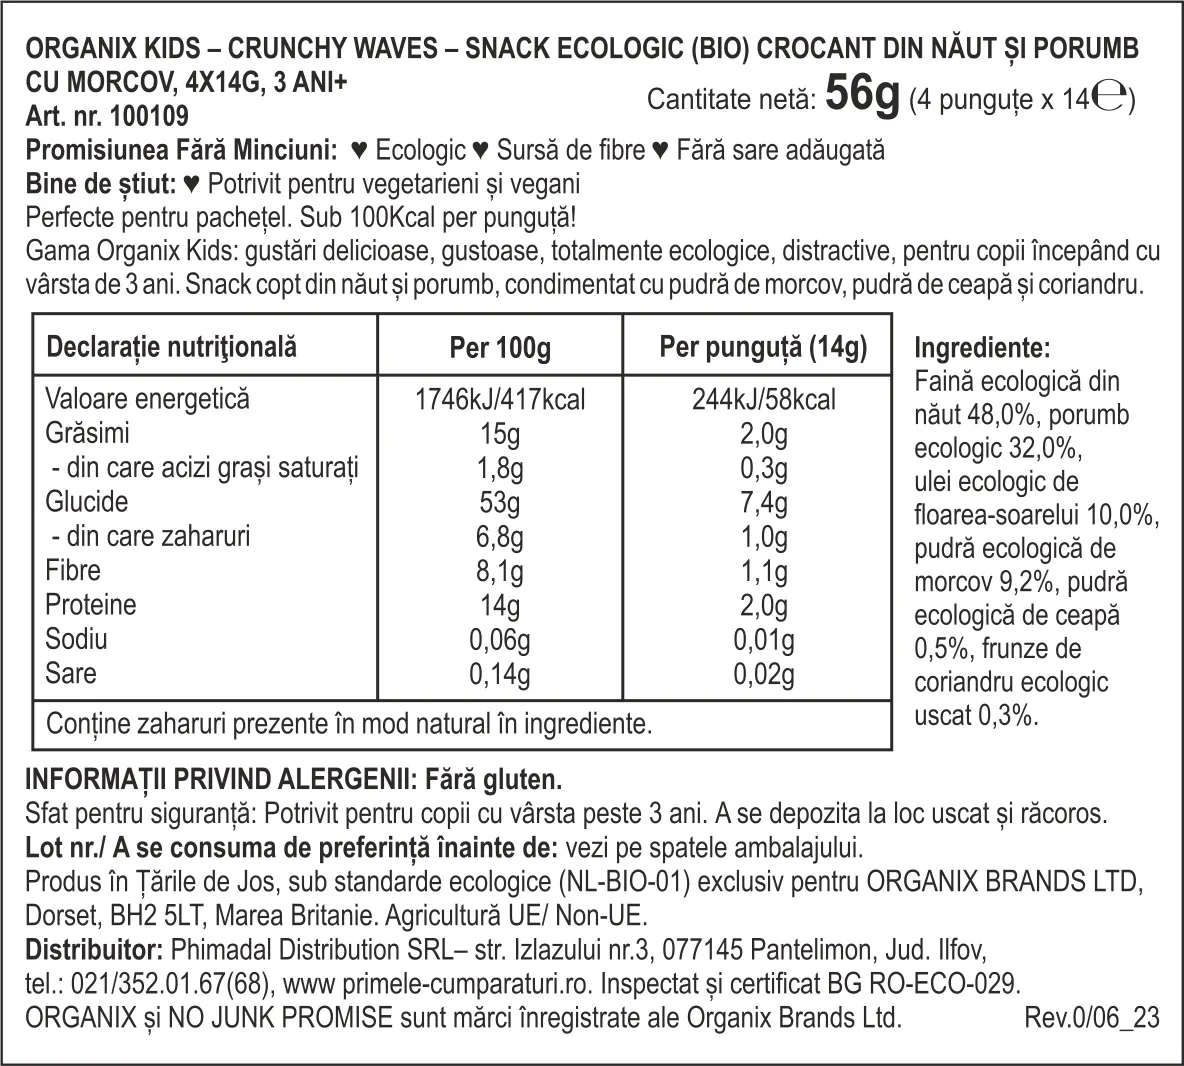 Snack eco crocant din naut si porumb cu morcov pentru +3 ani, 4x14g, Organix 